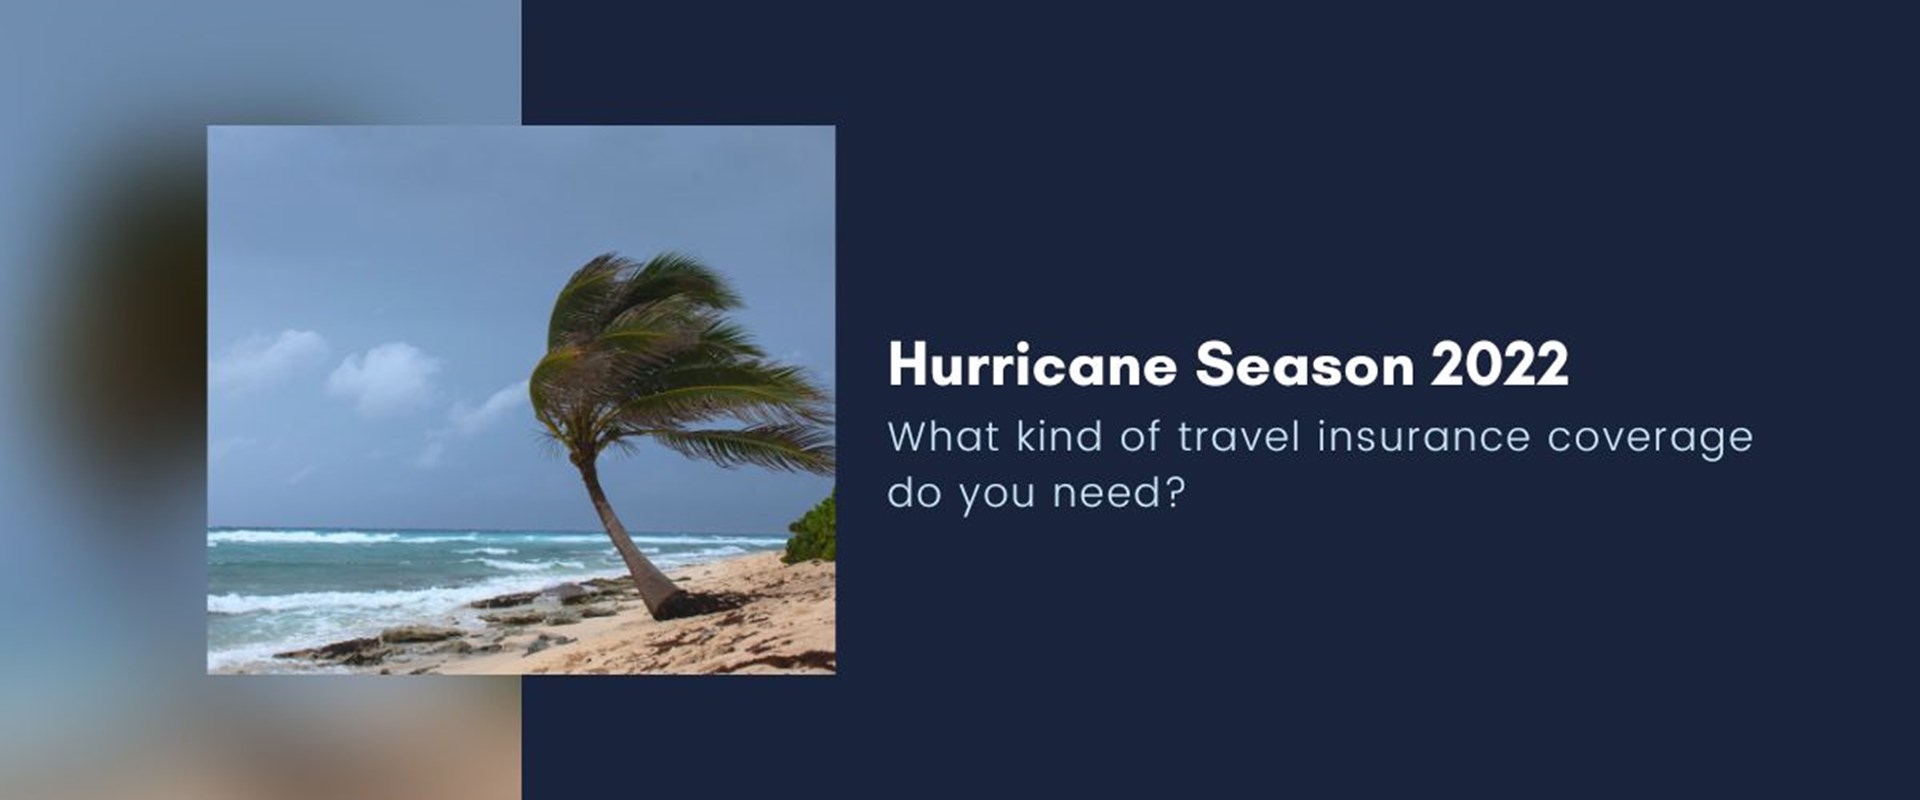 2022 Hurricane Season and Travel